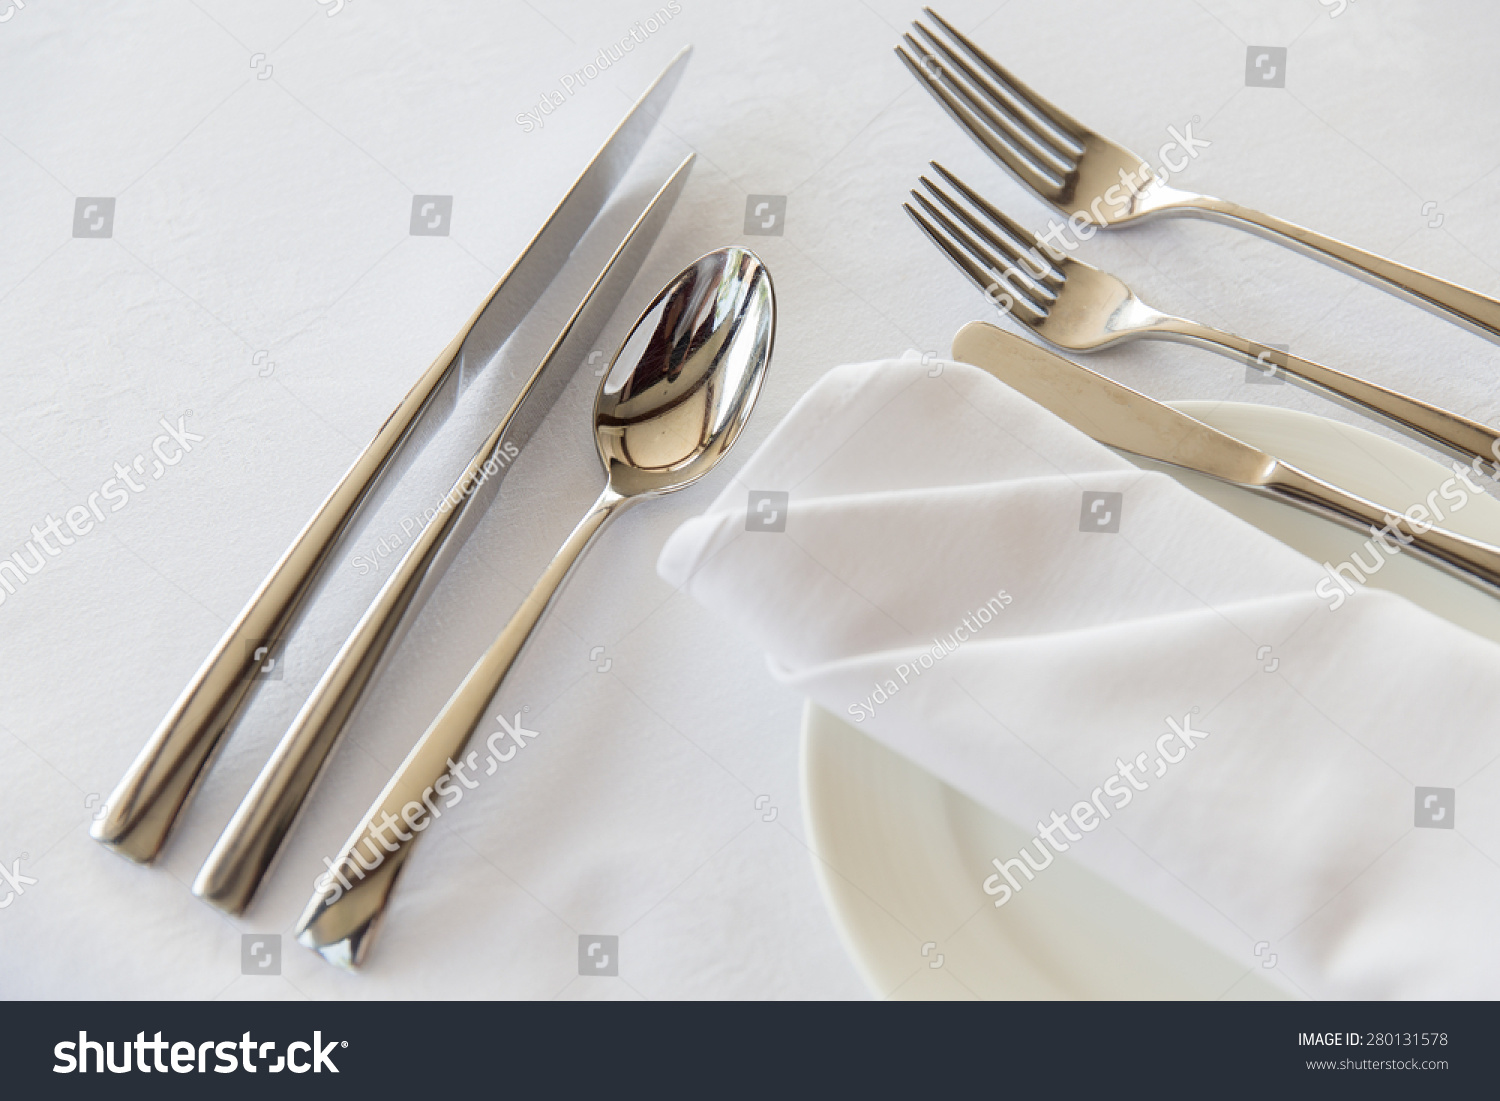 silverware table setting